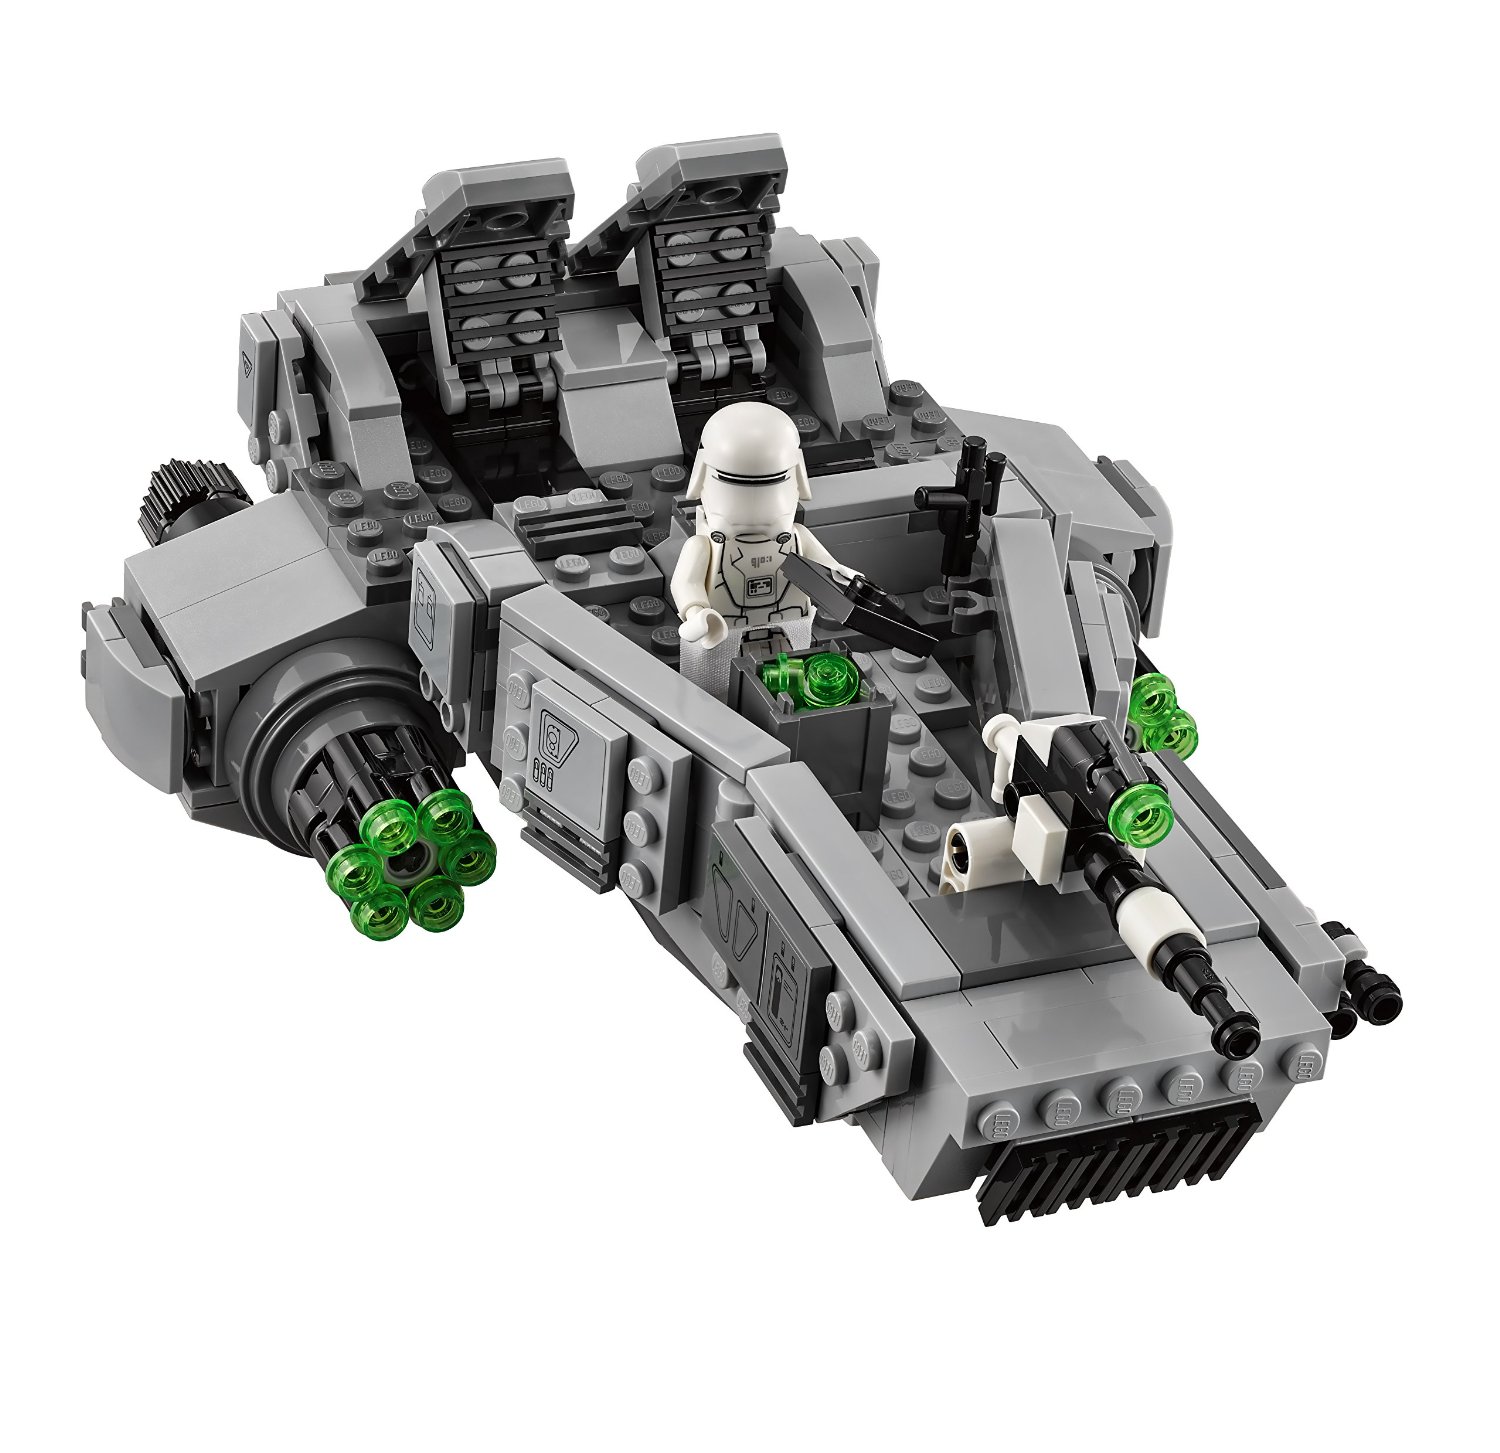 Shopping For LEGO Star Wars First Order Snowspeeder 75100 Building Kit?